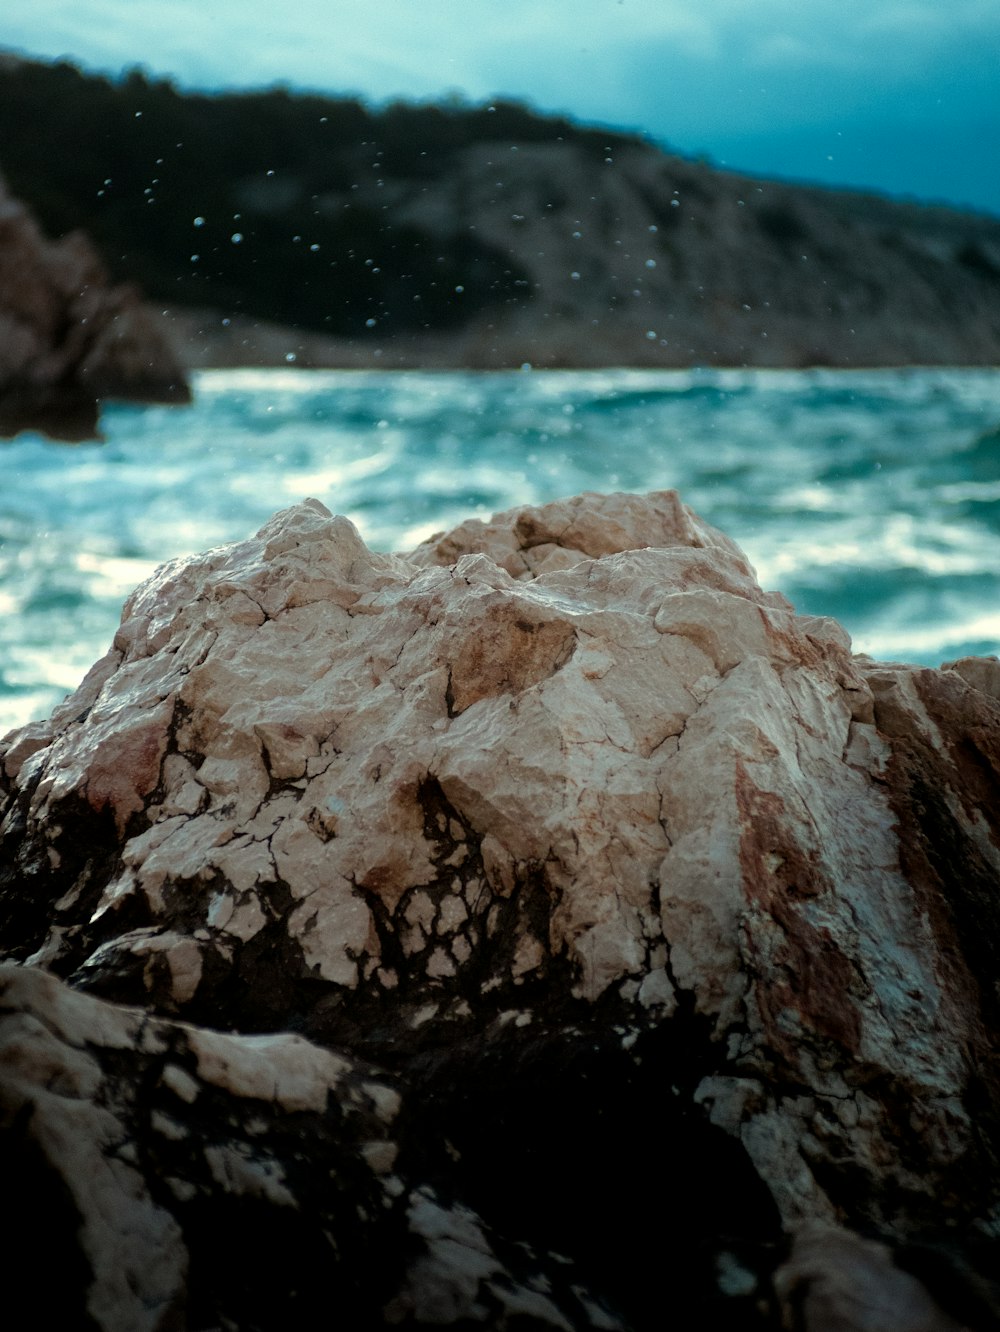 a large rock on a beach